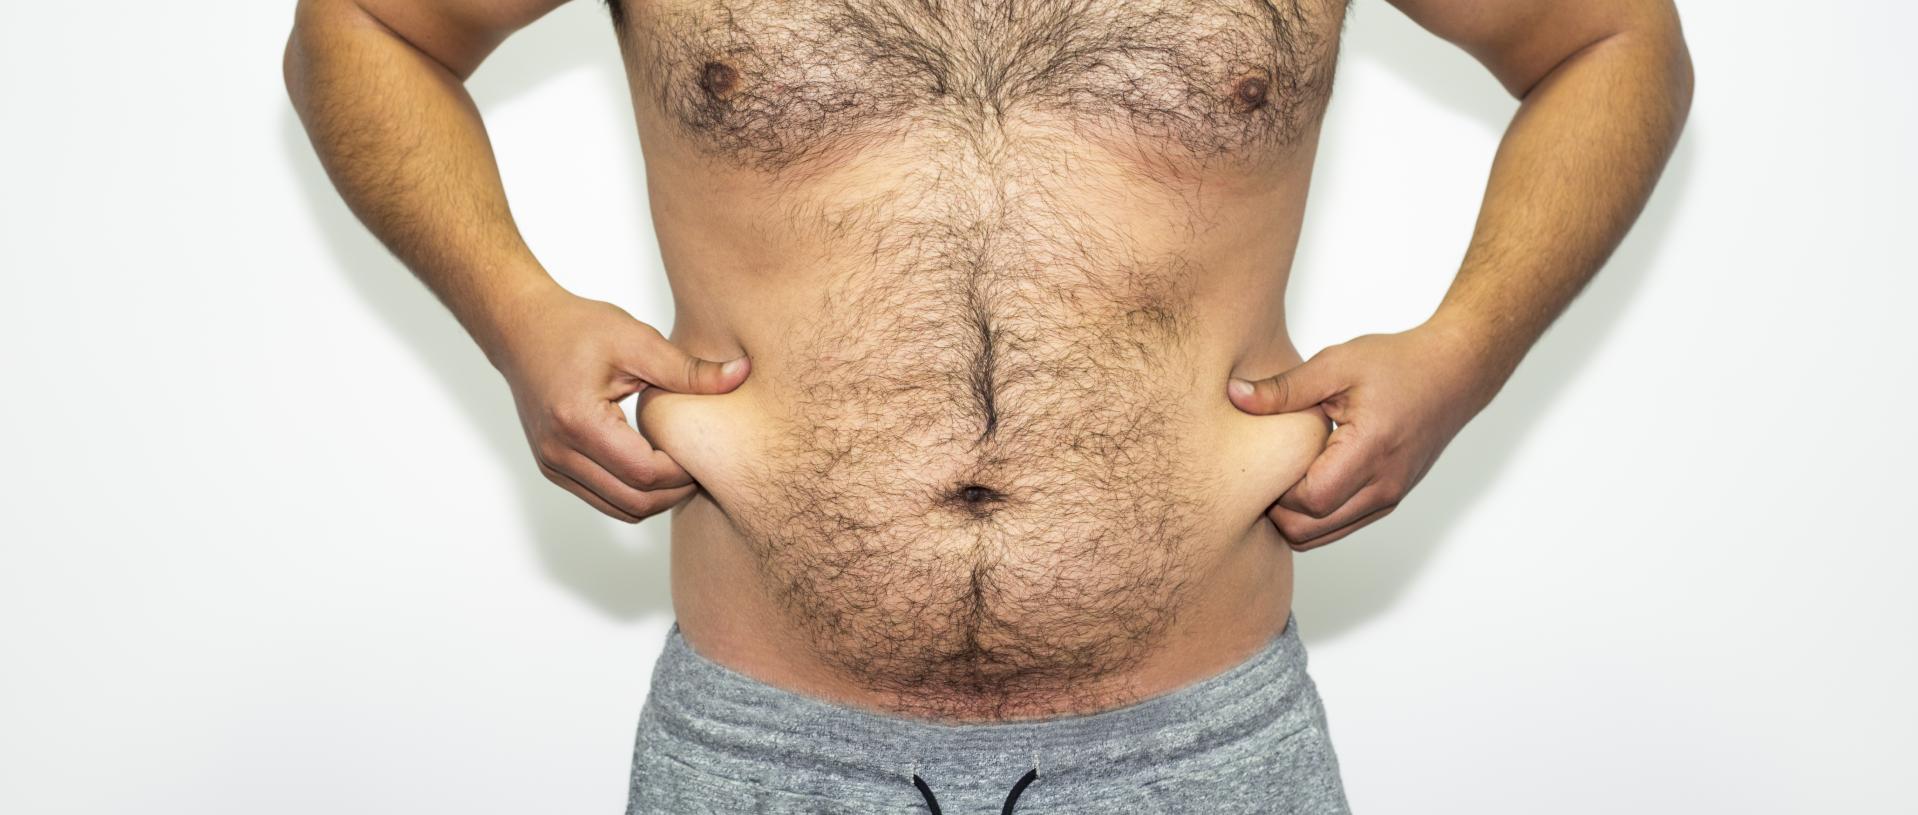 plastic surgery options for men, man holding his abdomen skin